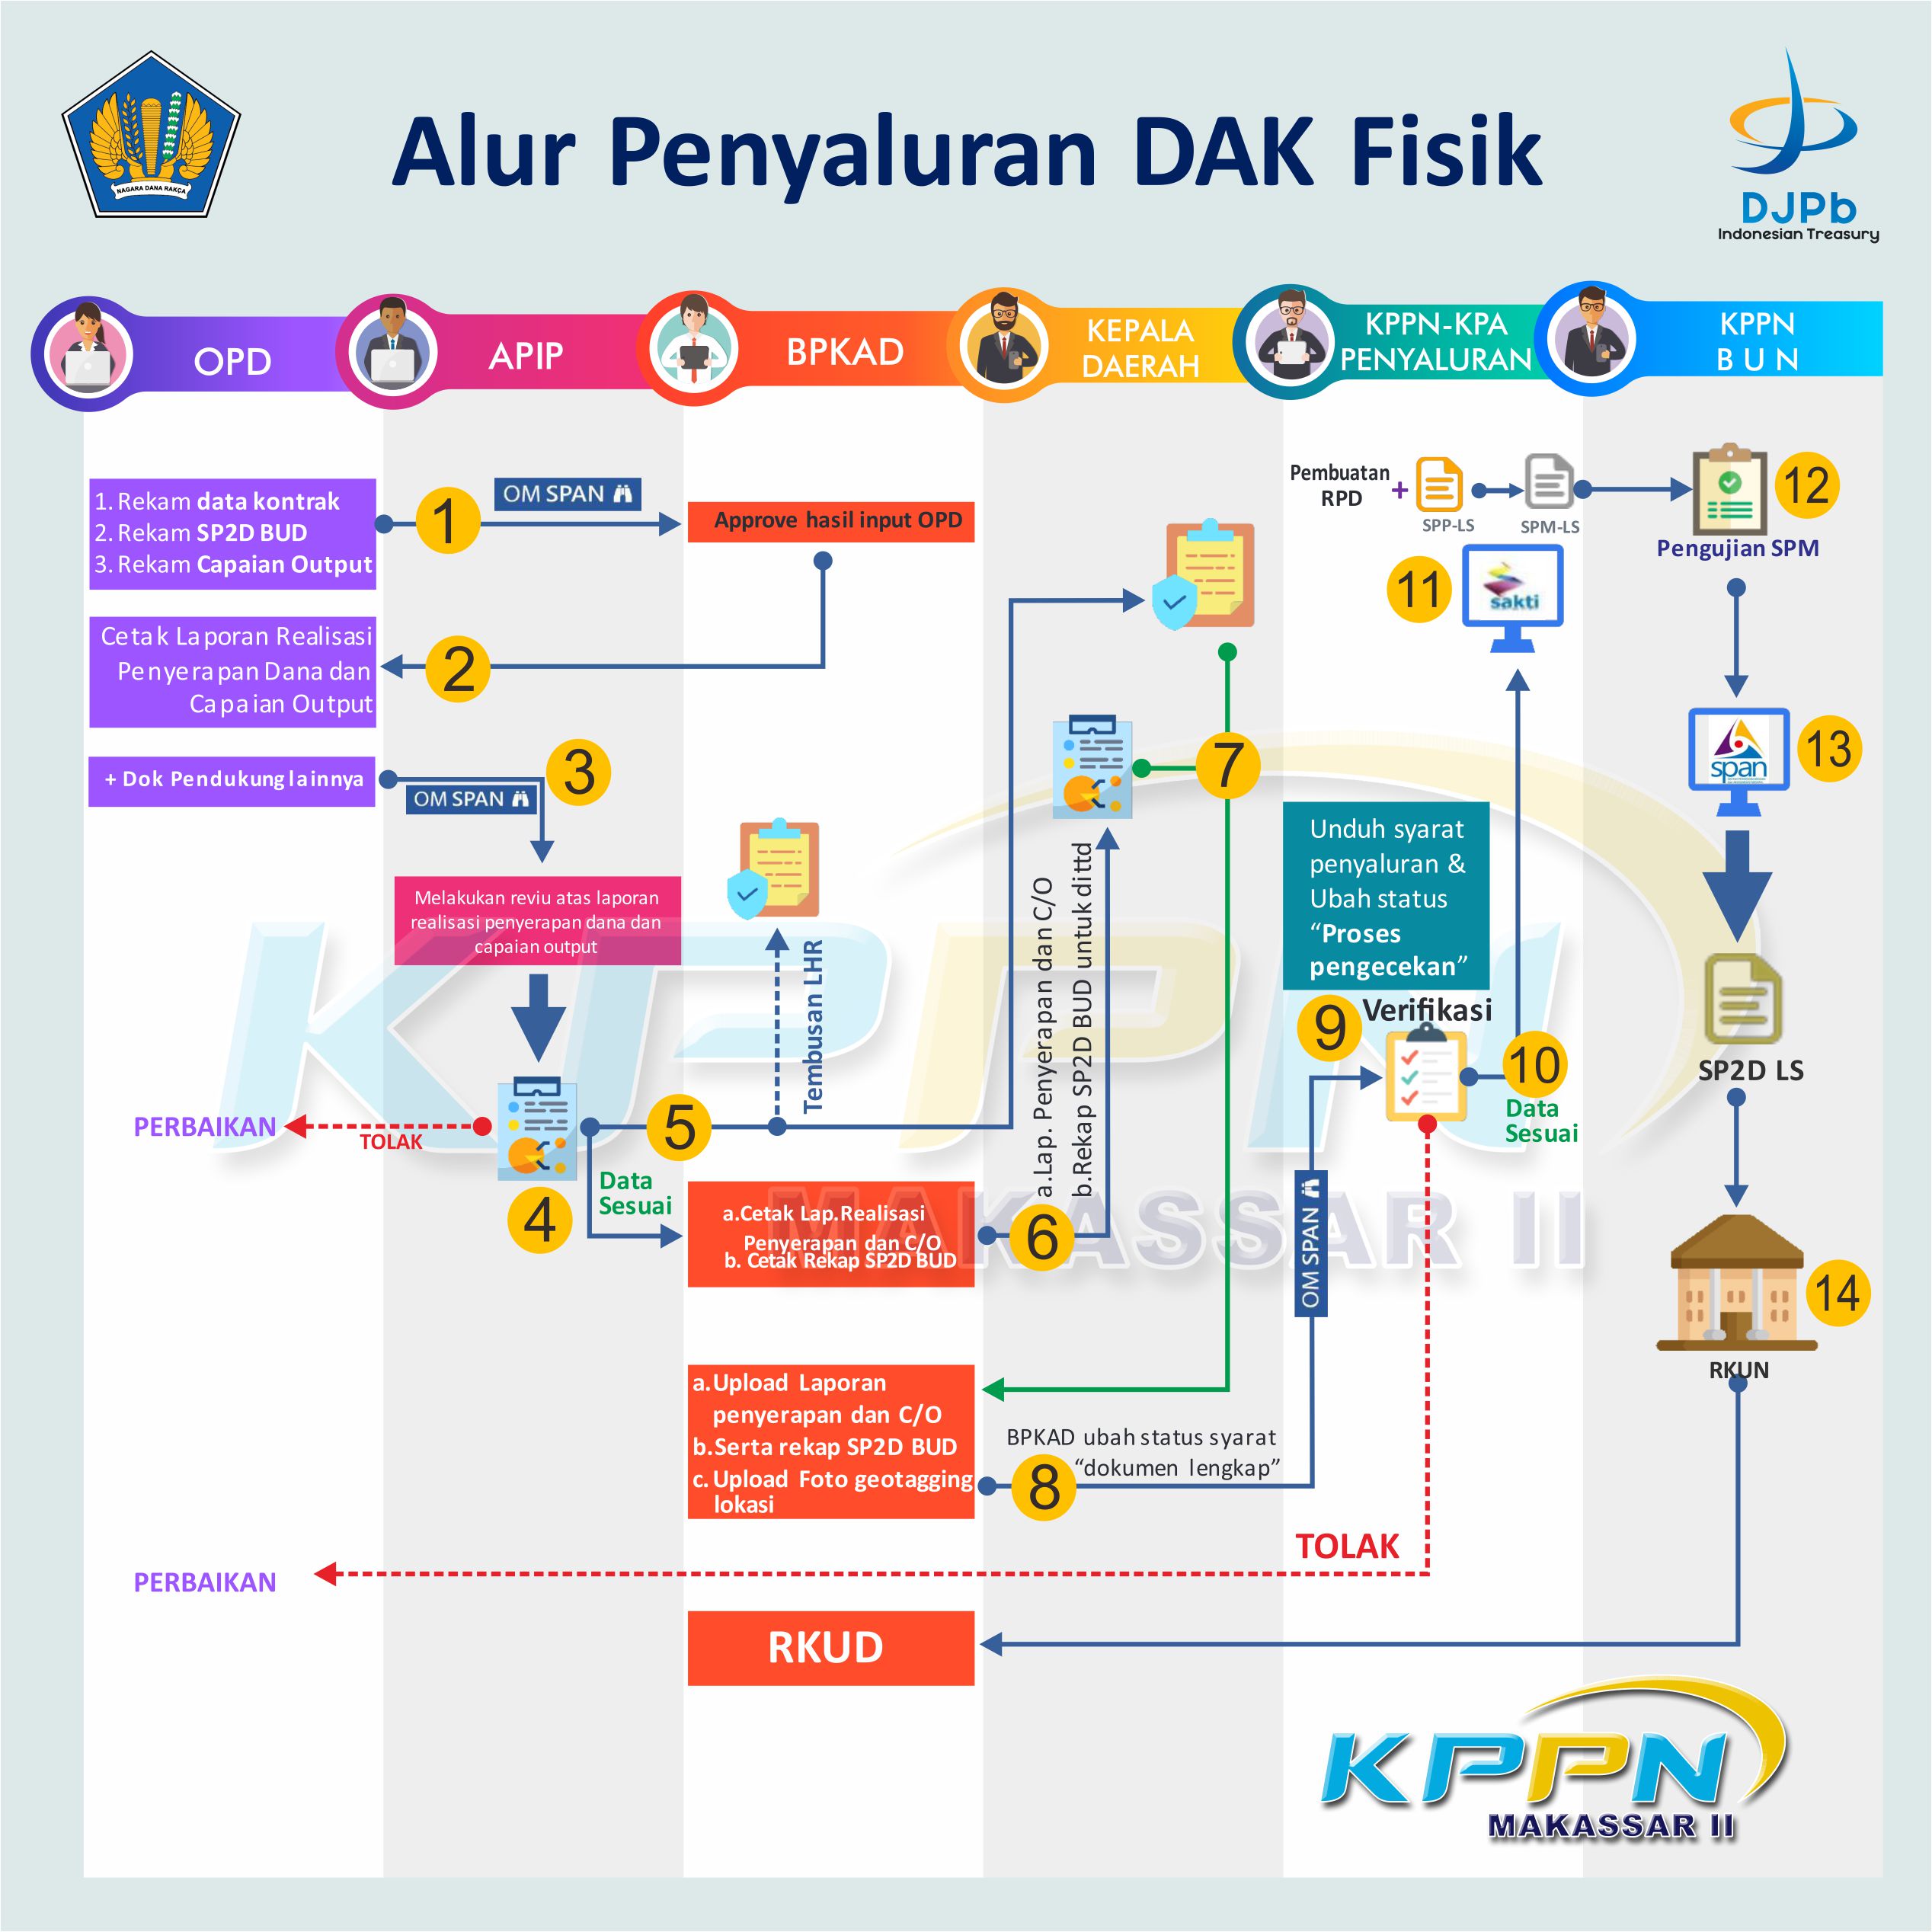 Alur Penyaluran DAK Fisik KPPN Makassar II